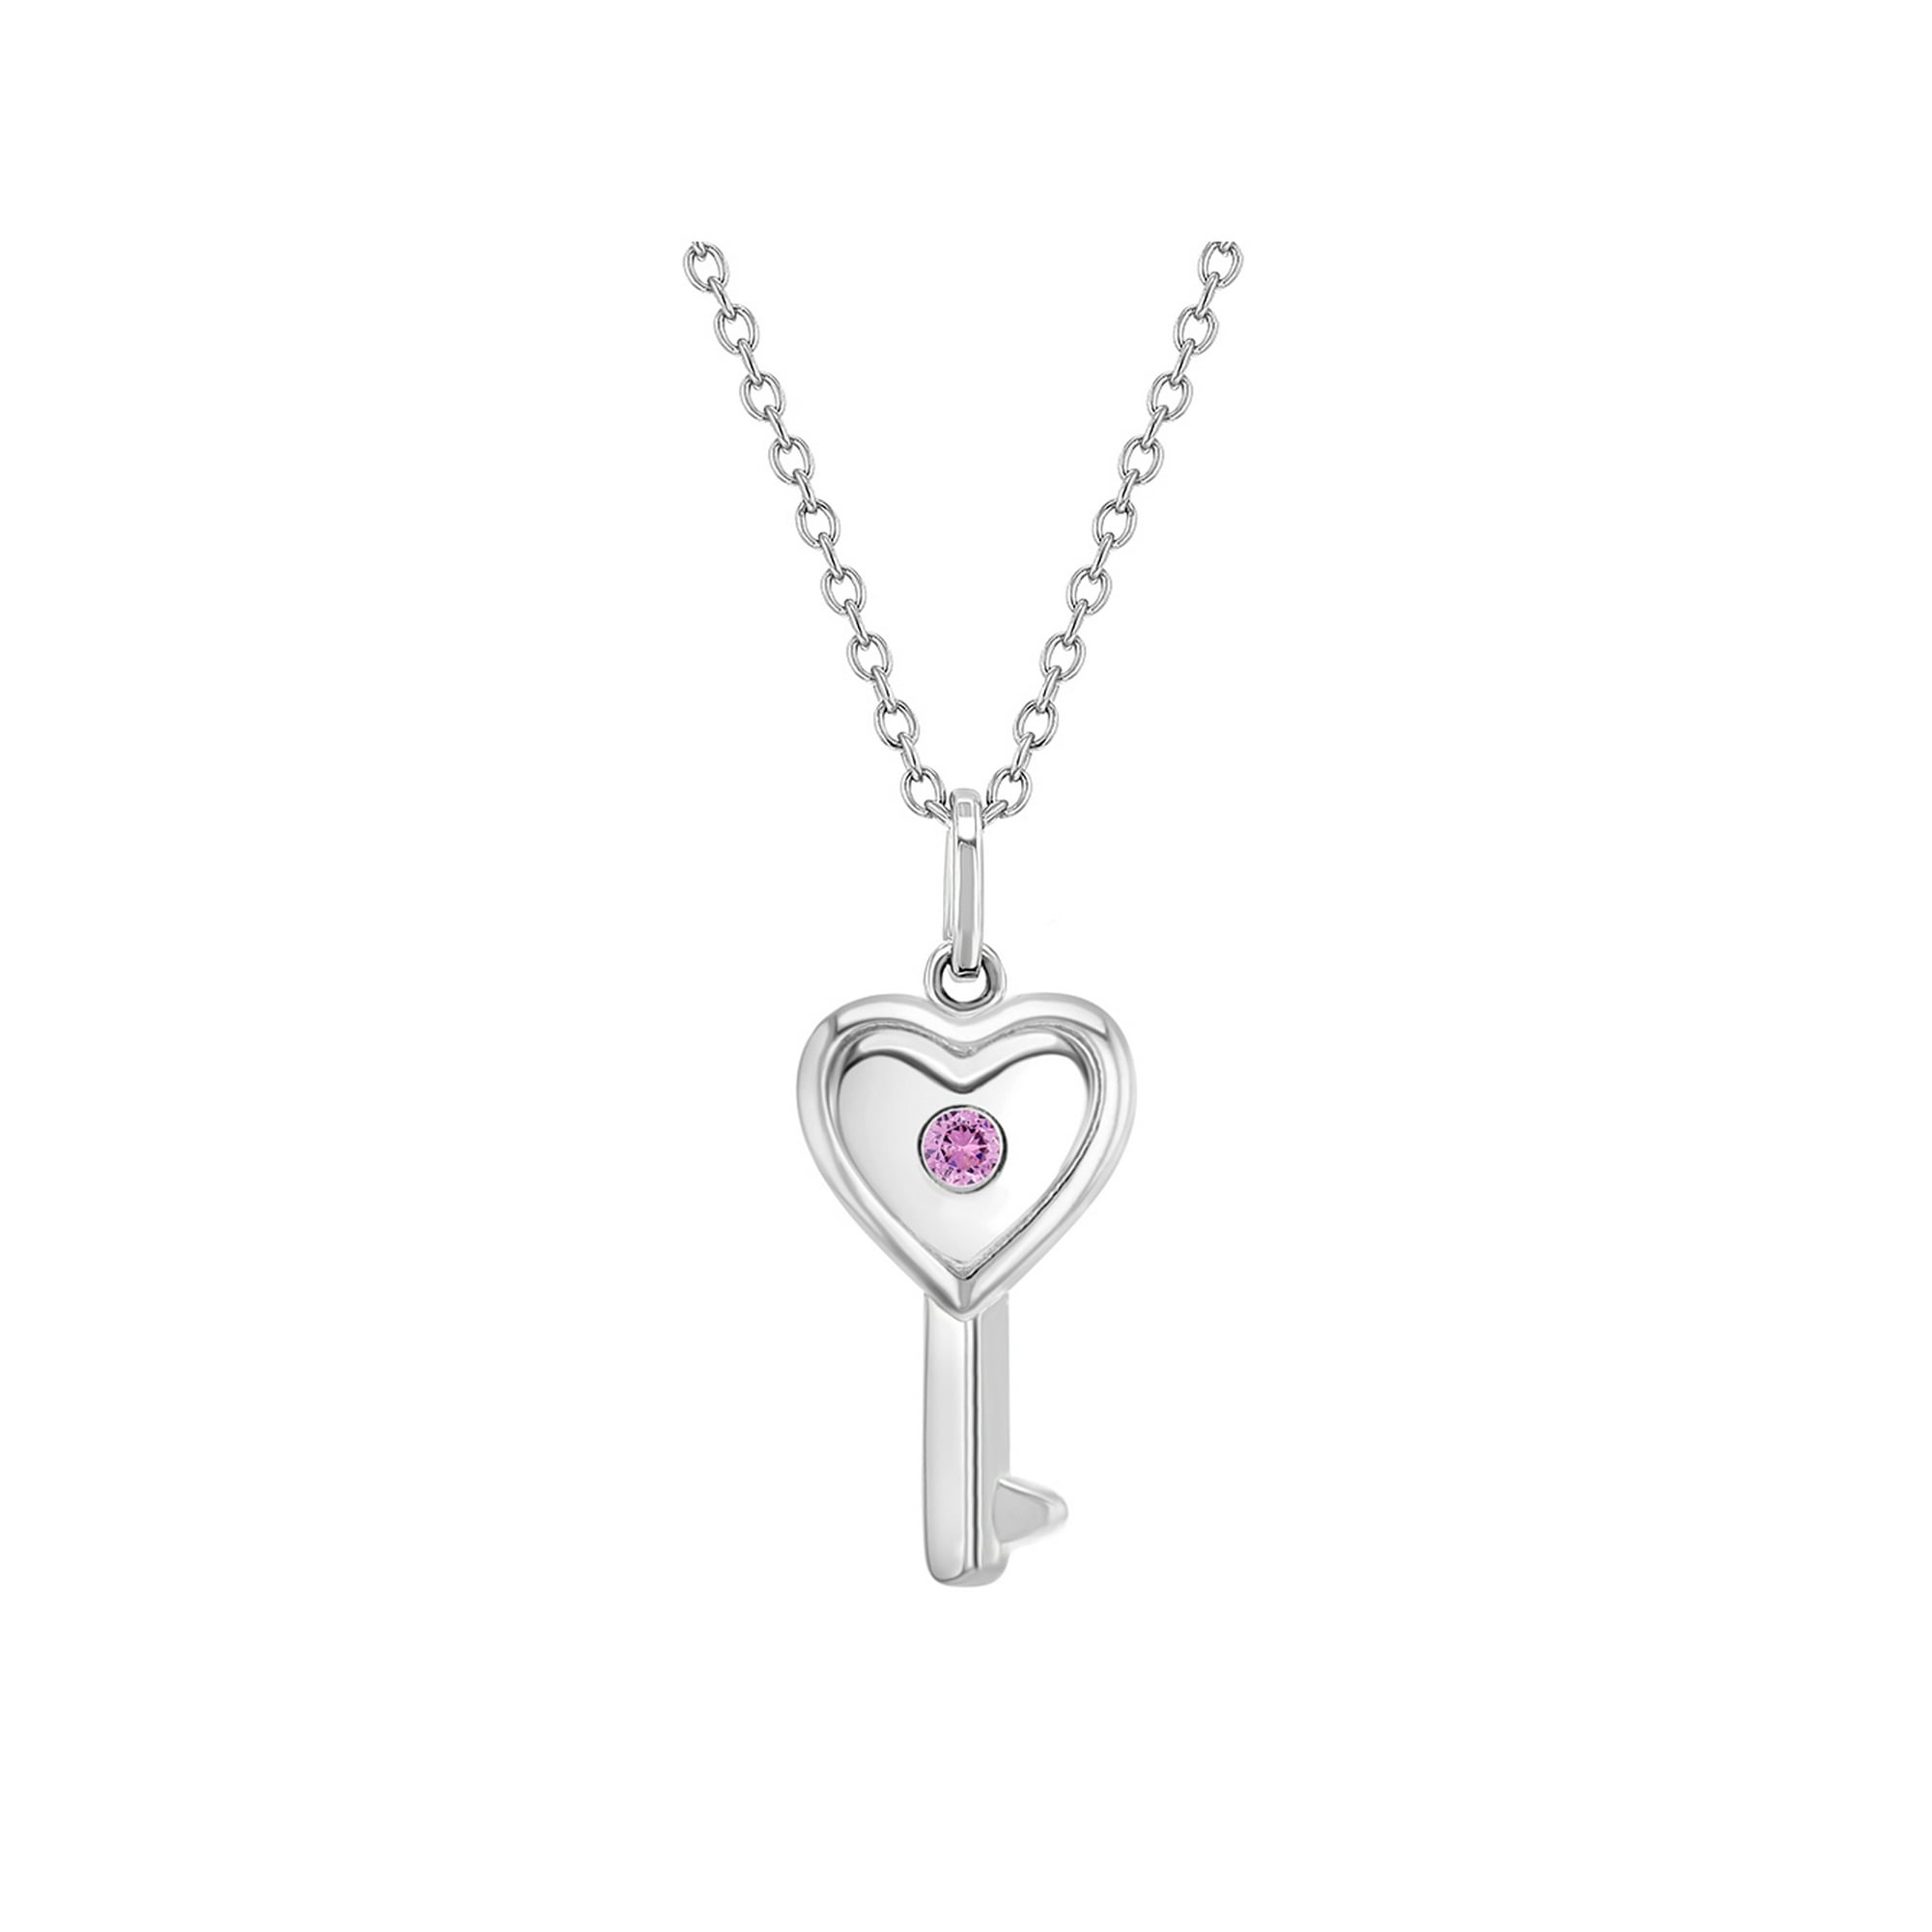 Tiny Sterling Silver Heart Key Charm Necklace